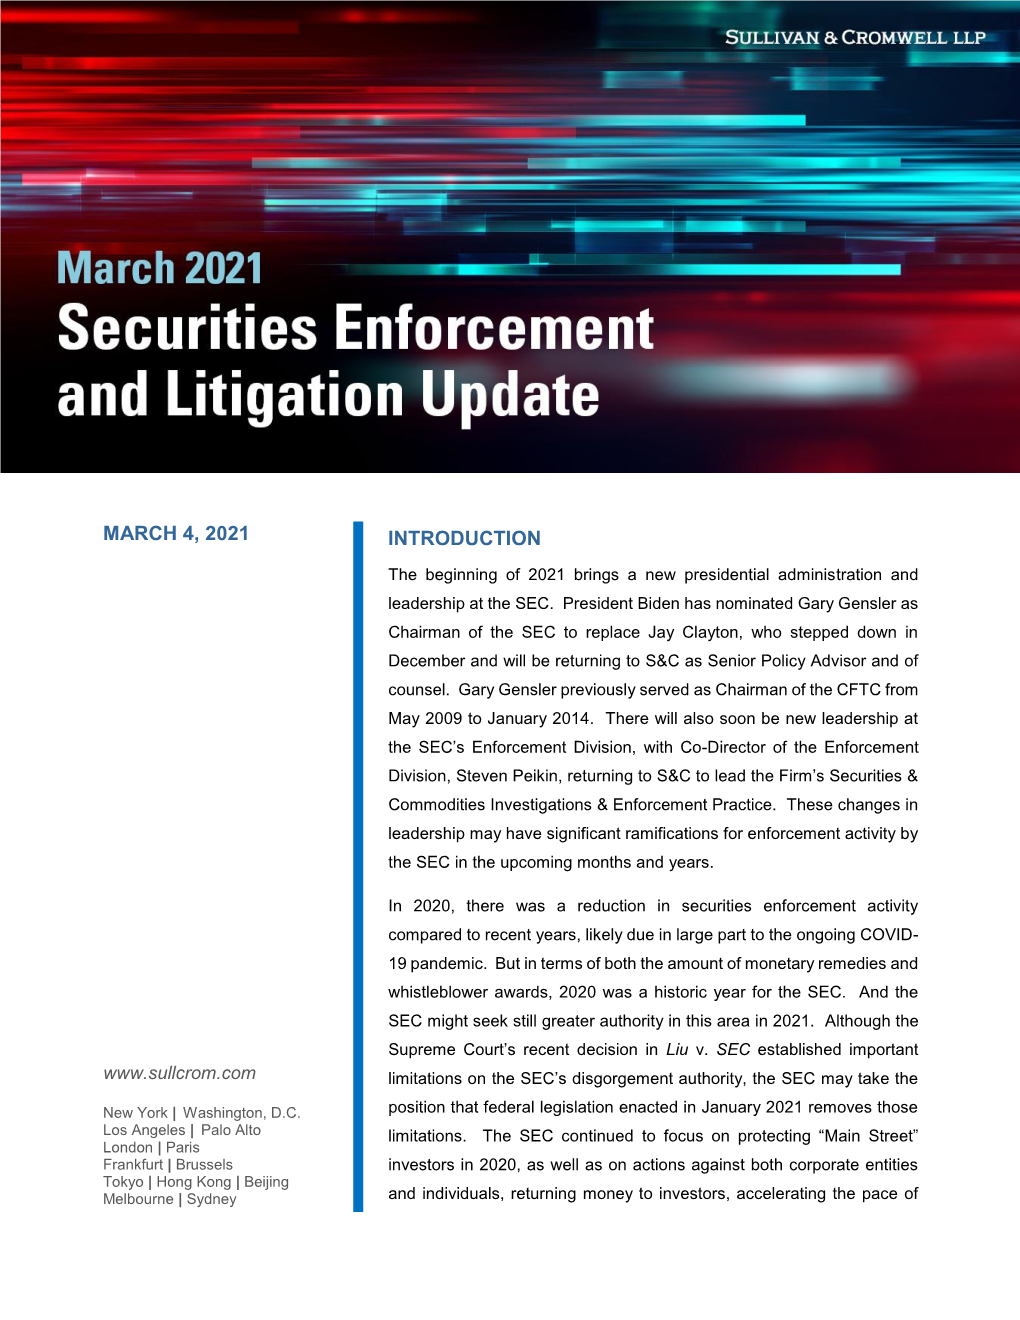 Securities Enforcement and Litigation Update Part 1 – Securities Enforcement